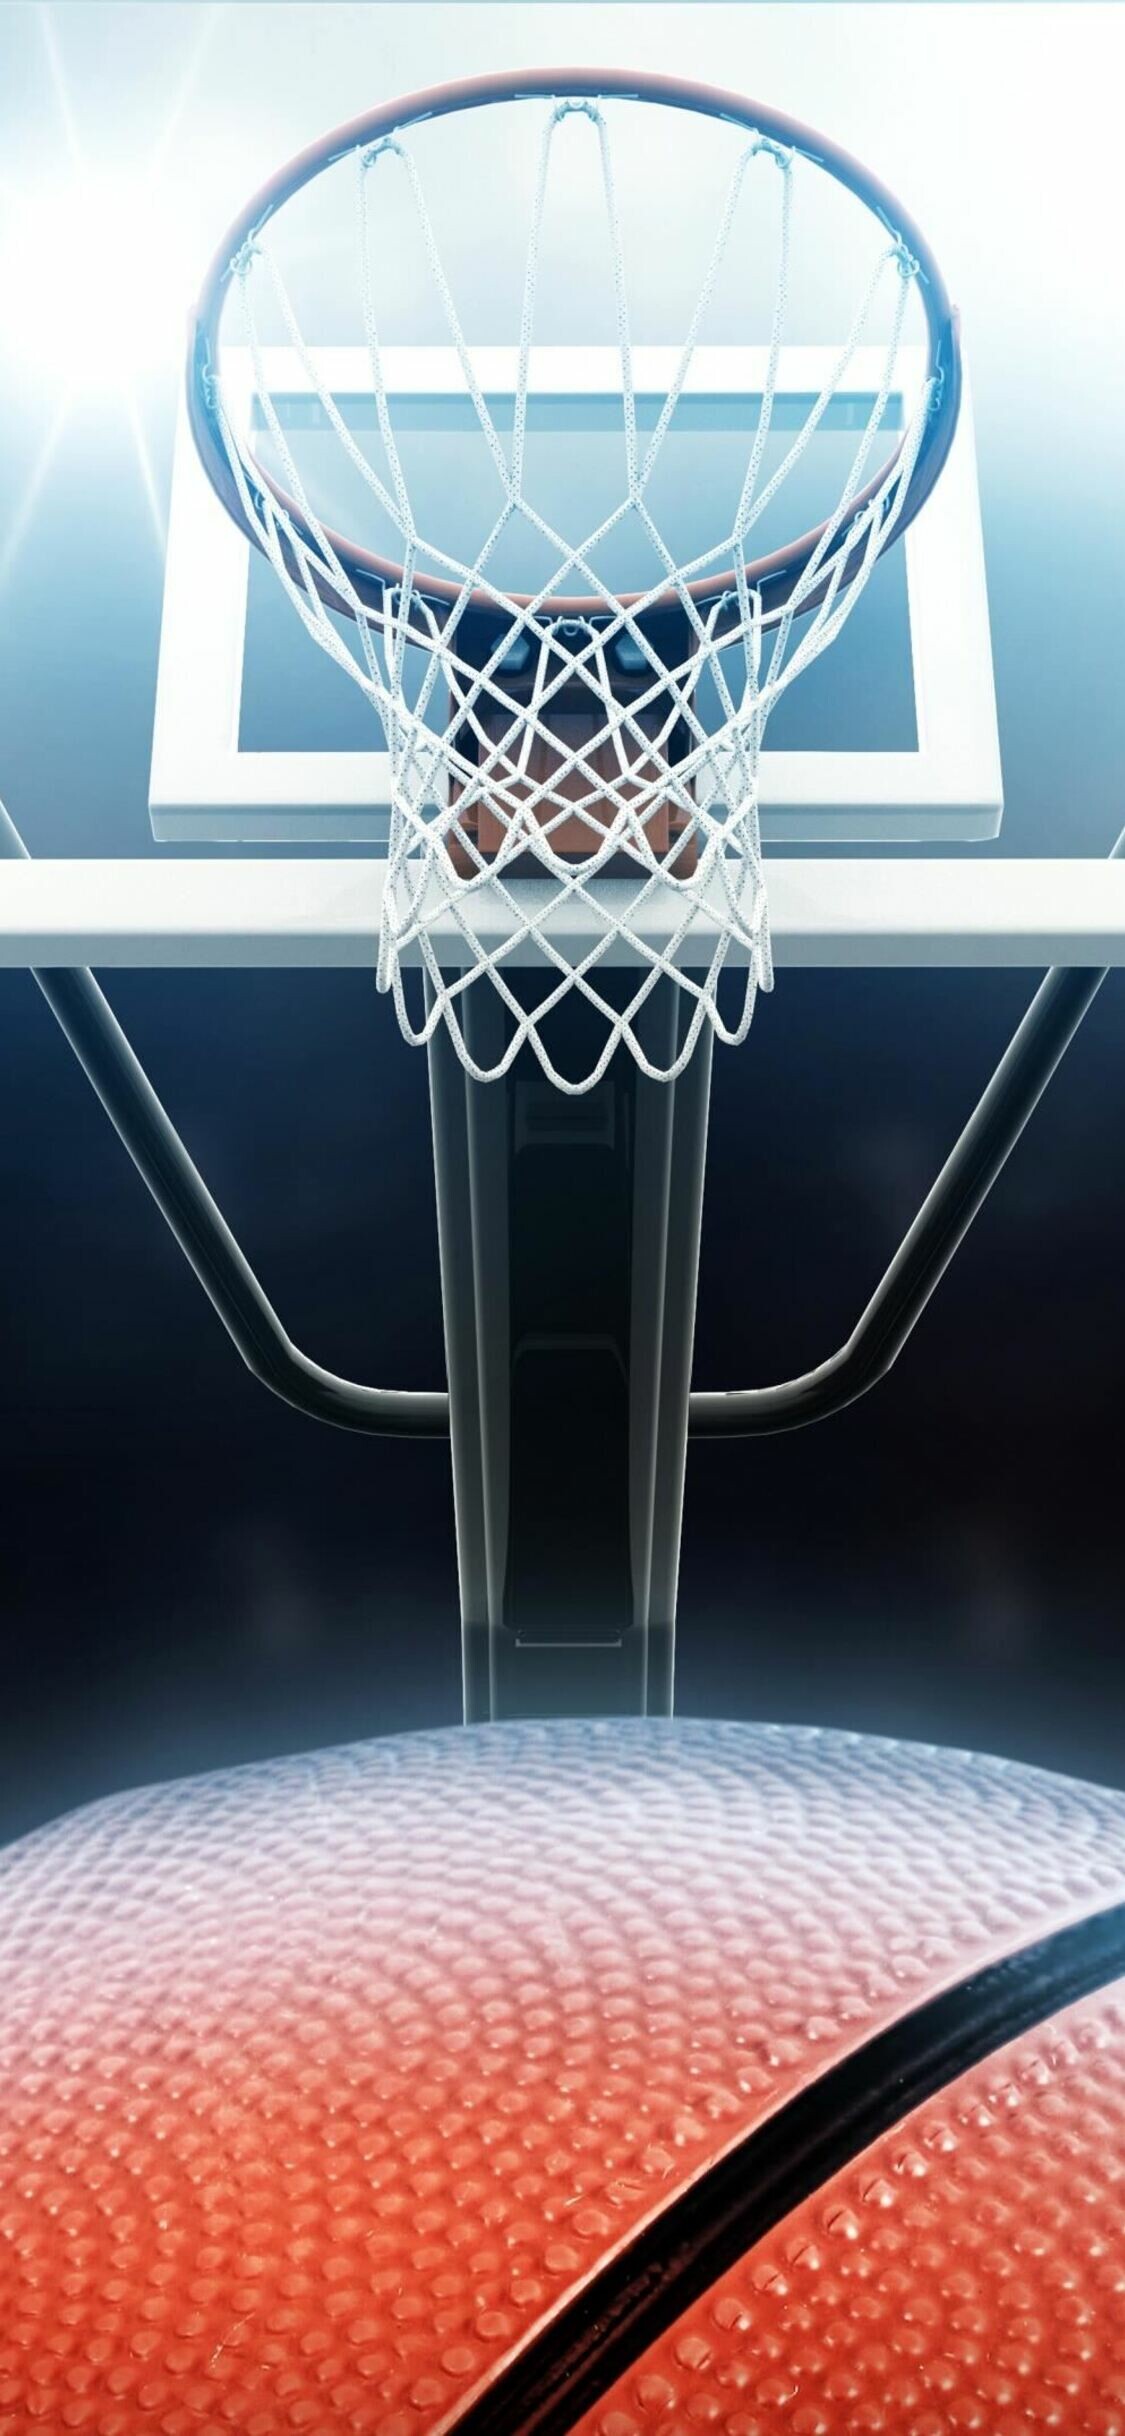 Basketball 4k iPhone wallpaper, HD resolution, High-quality image, Apple device, 1130x2440 HD Phone